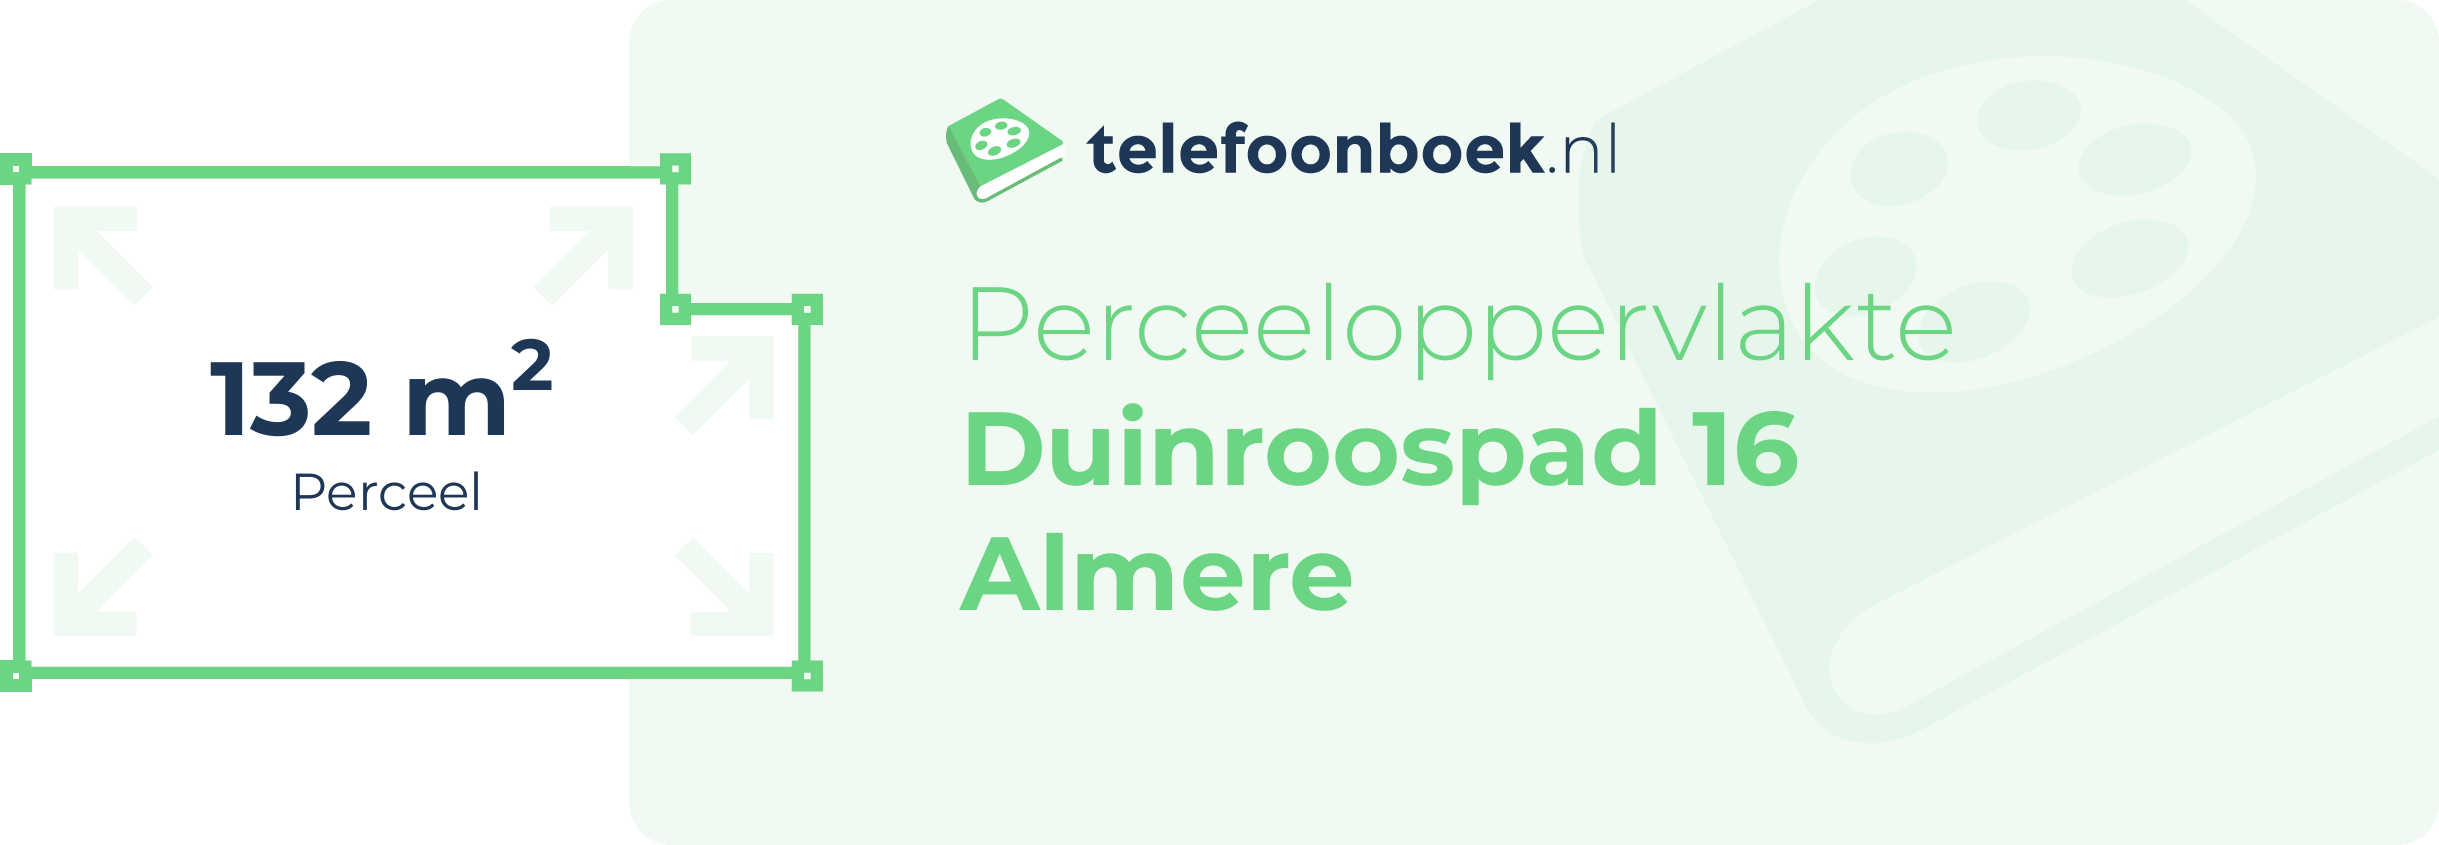 Perceeloppervlakte Duinroospad 16 Almere